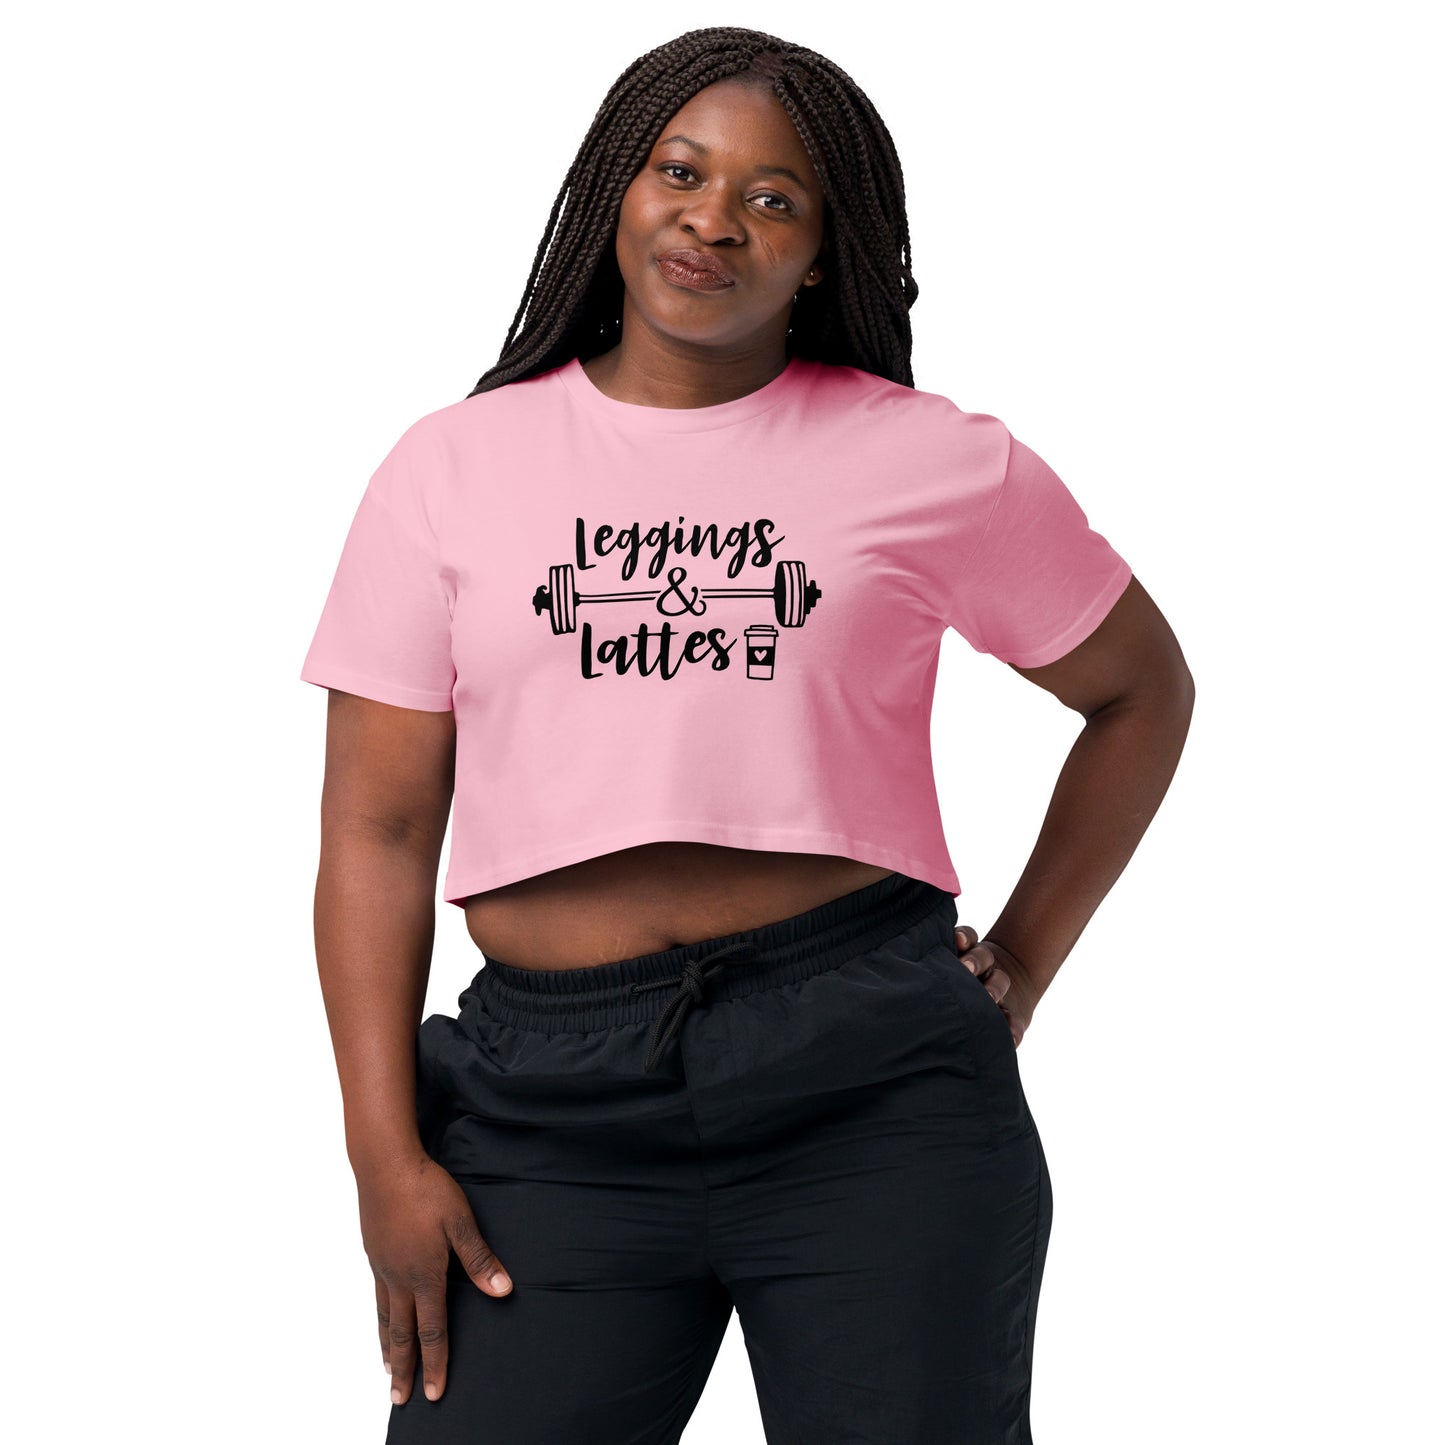 Women’s Gym Crop Tee - Leggins and Lattes - FAFO Sportswear